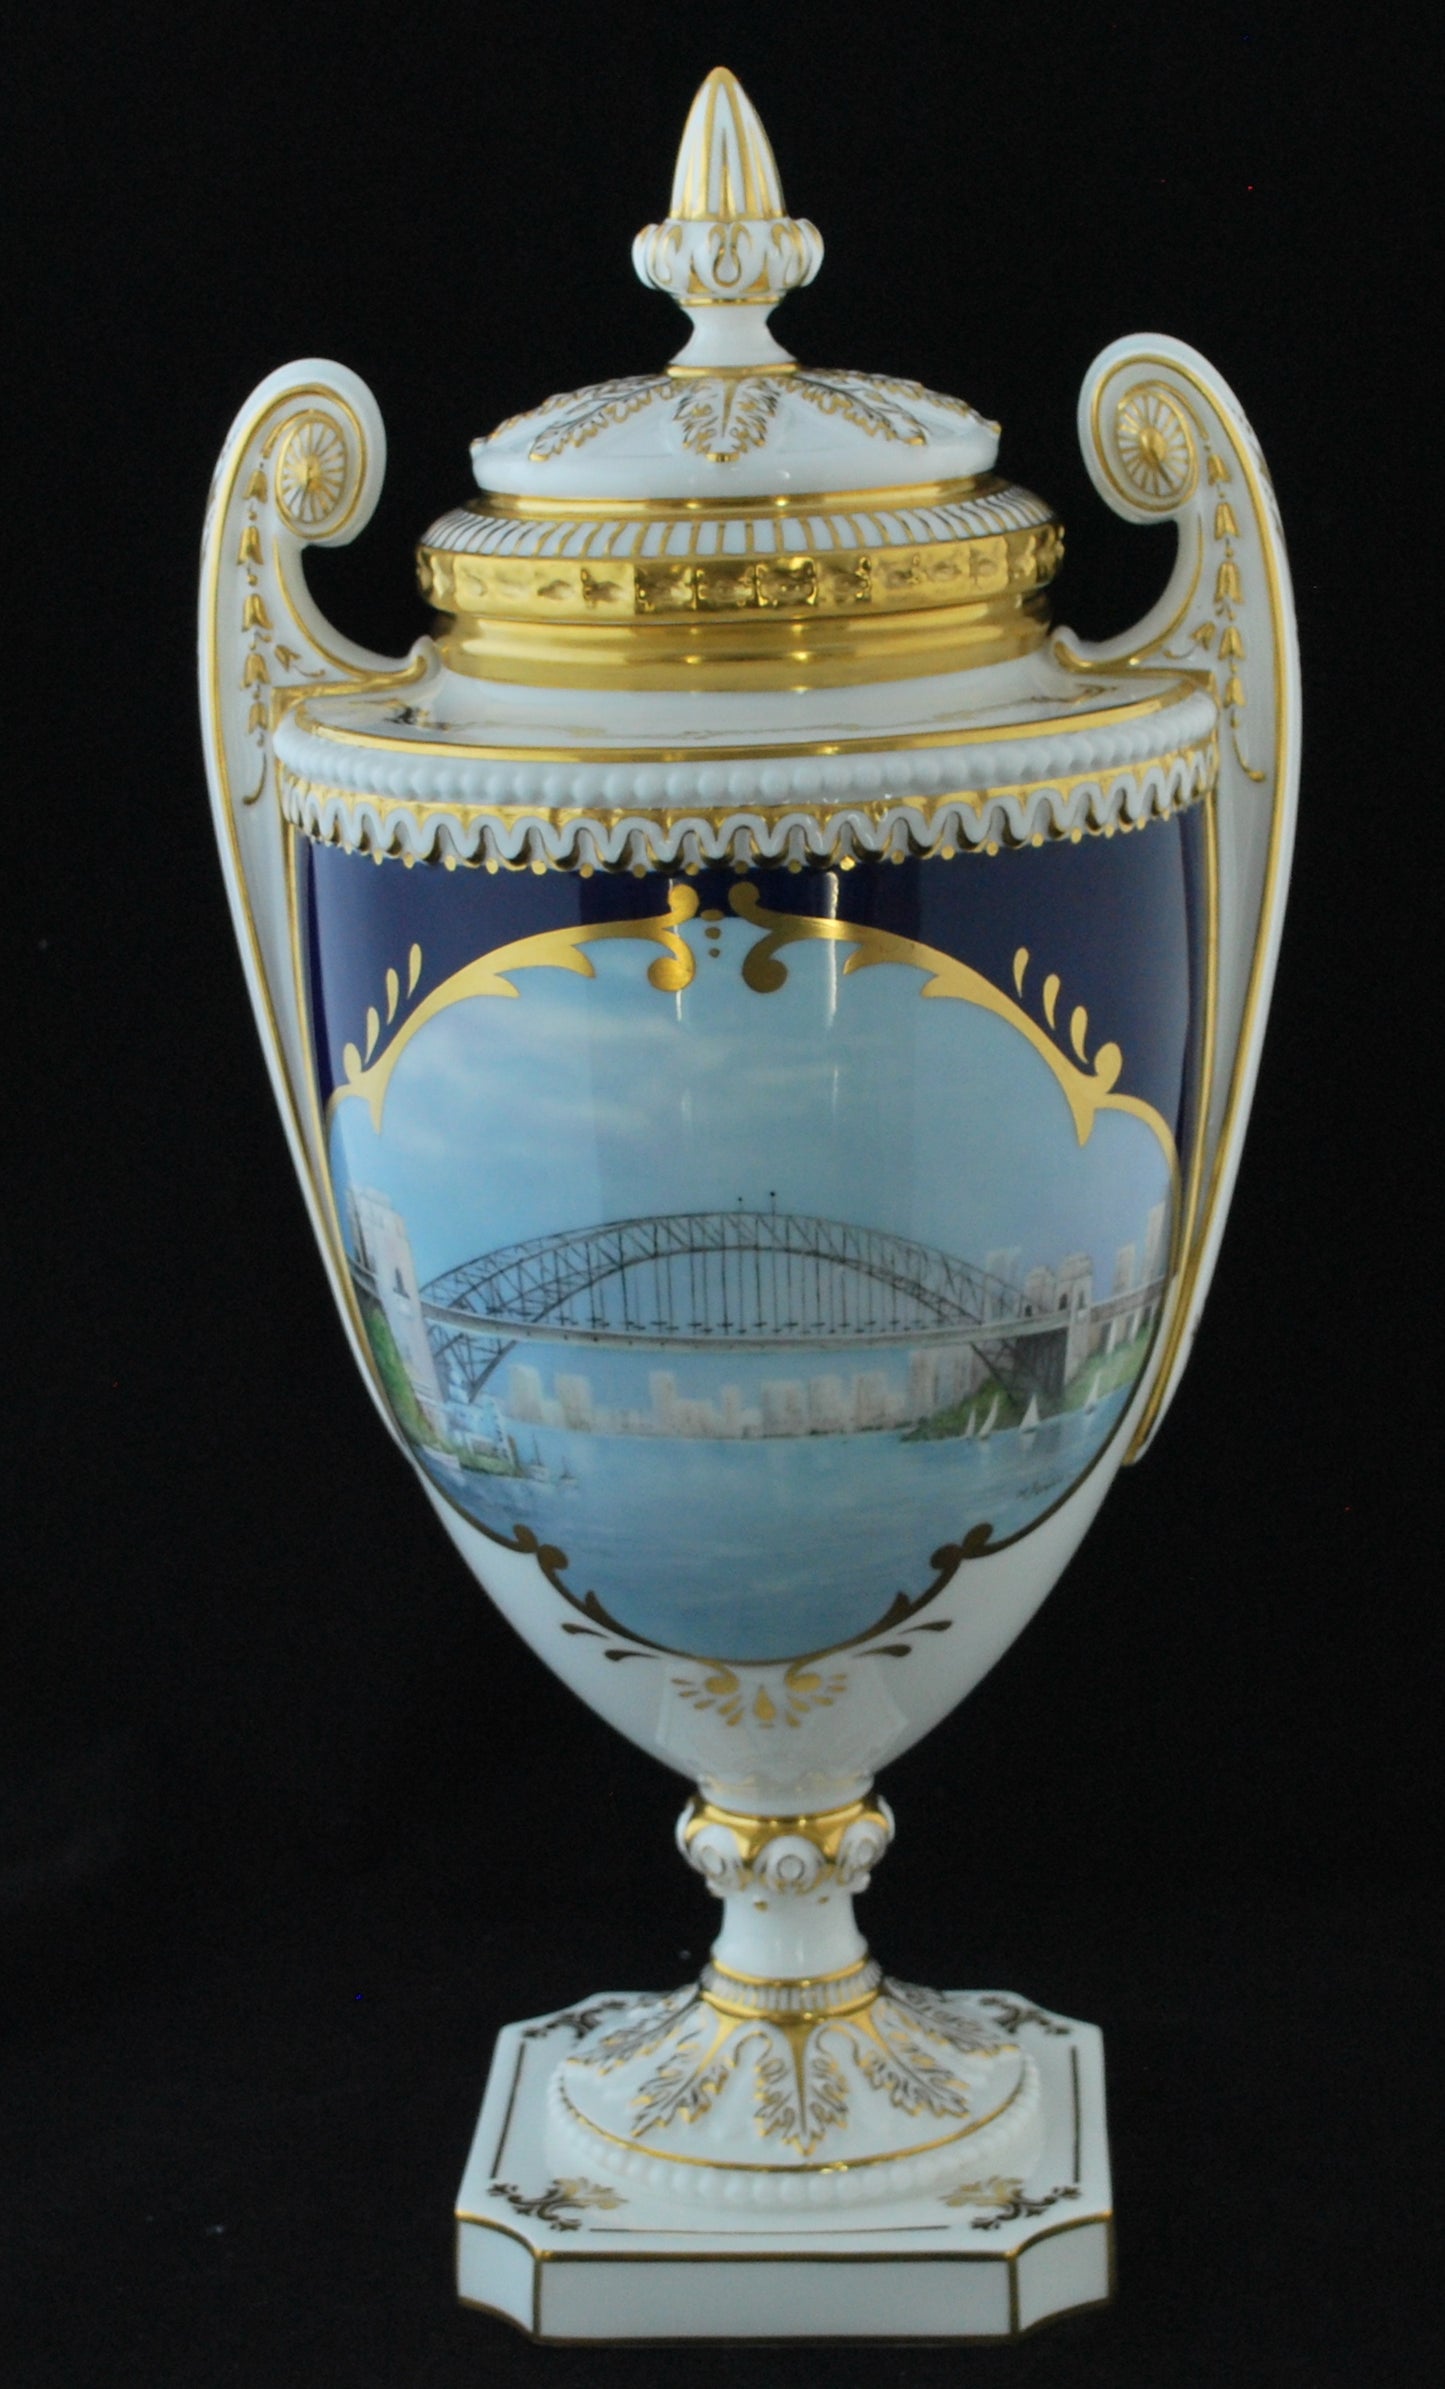 Sydney Harbour Bridge vase